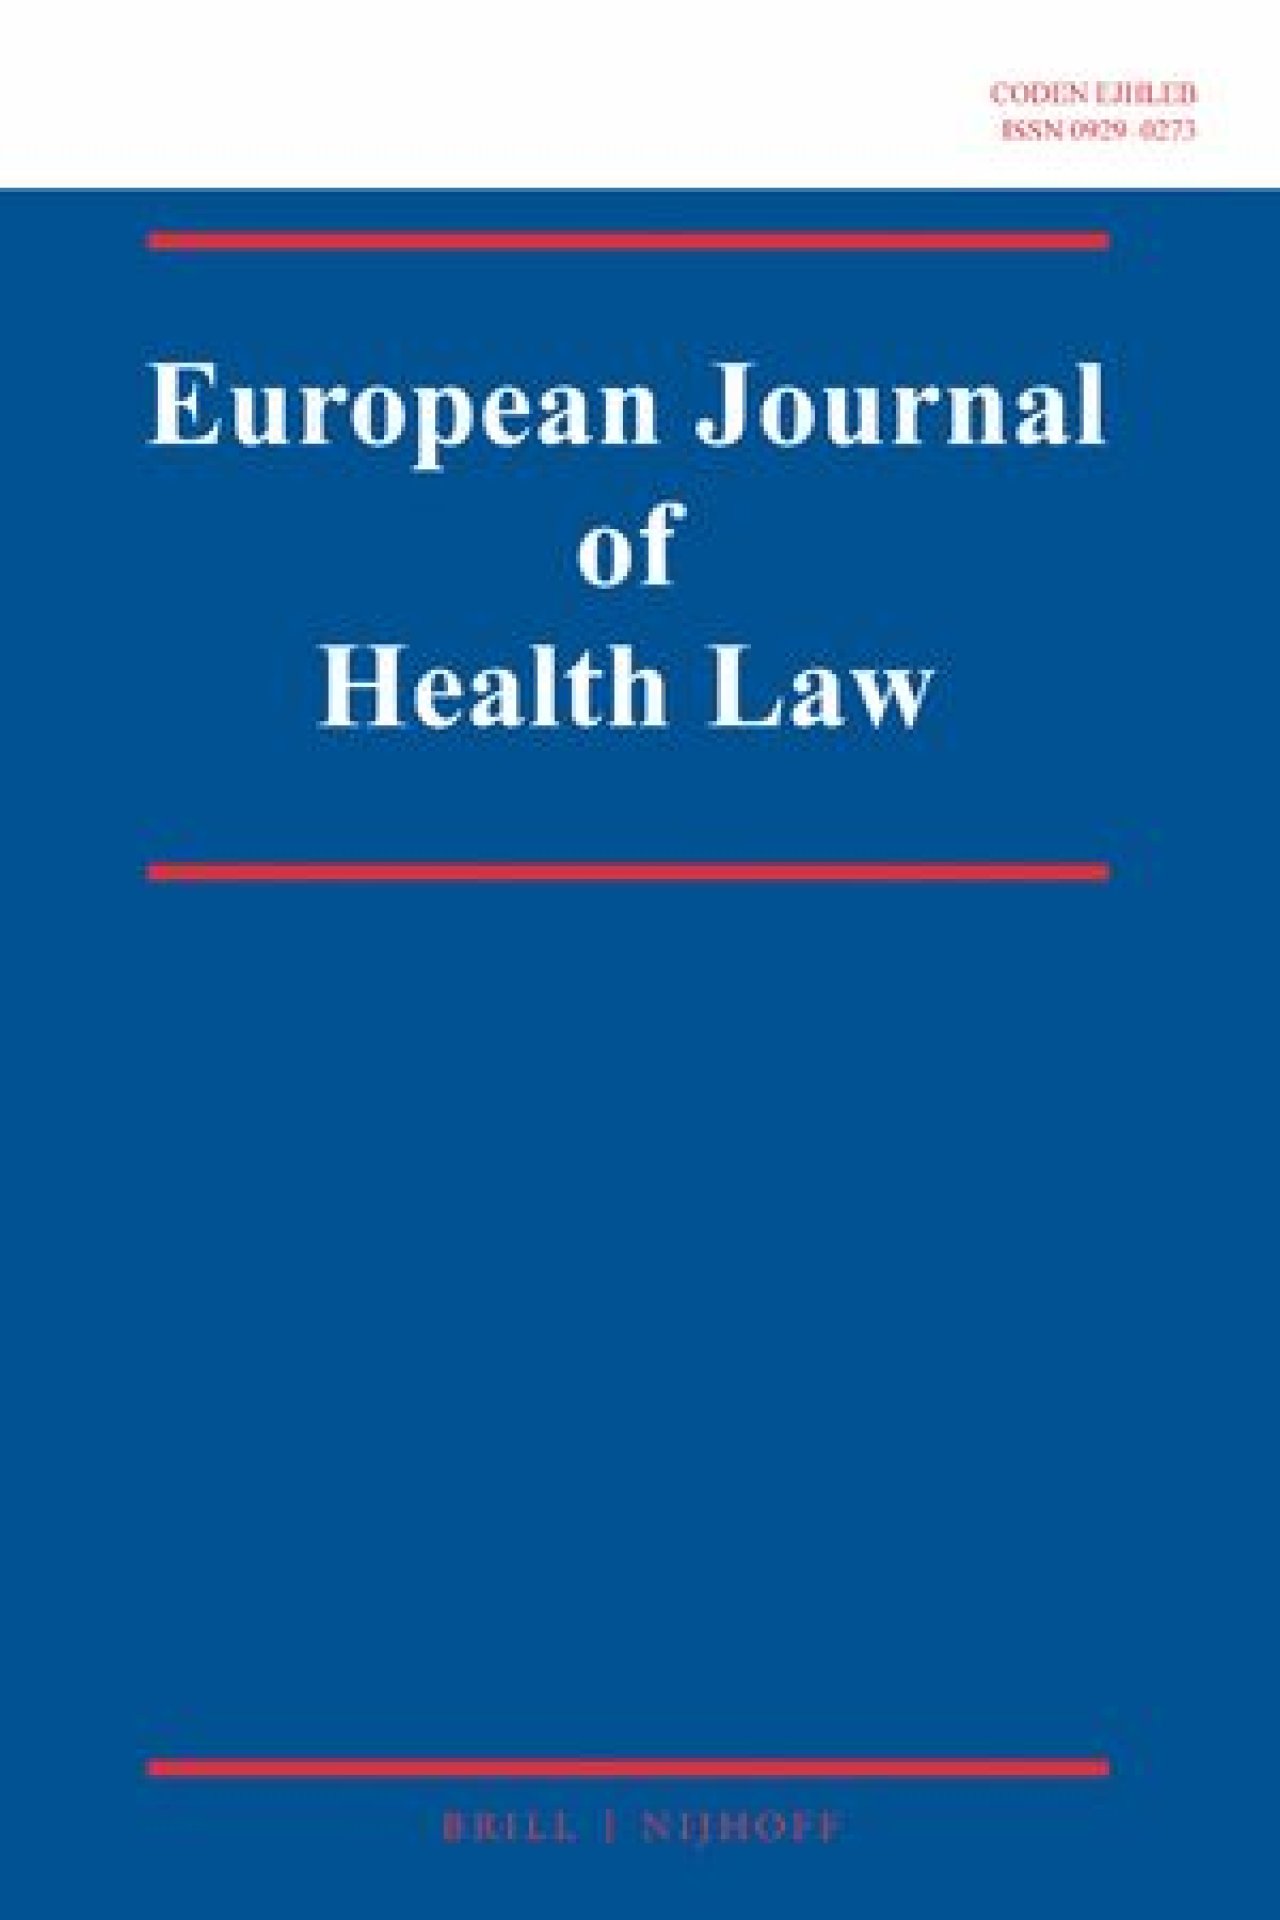 European Journal of Health Law.